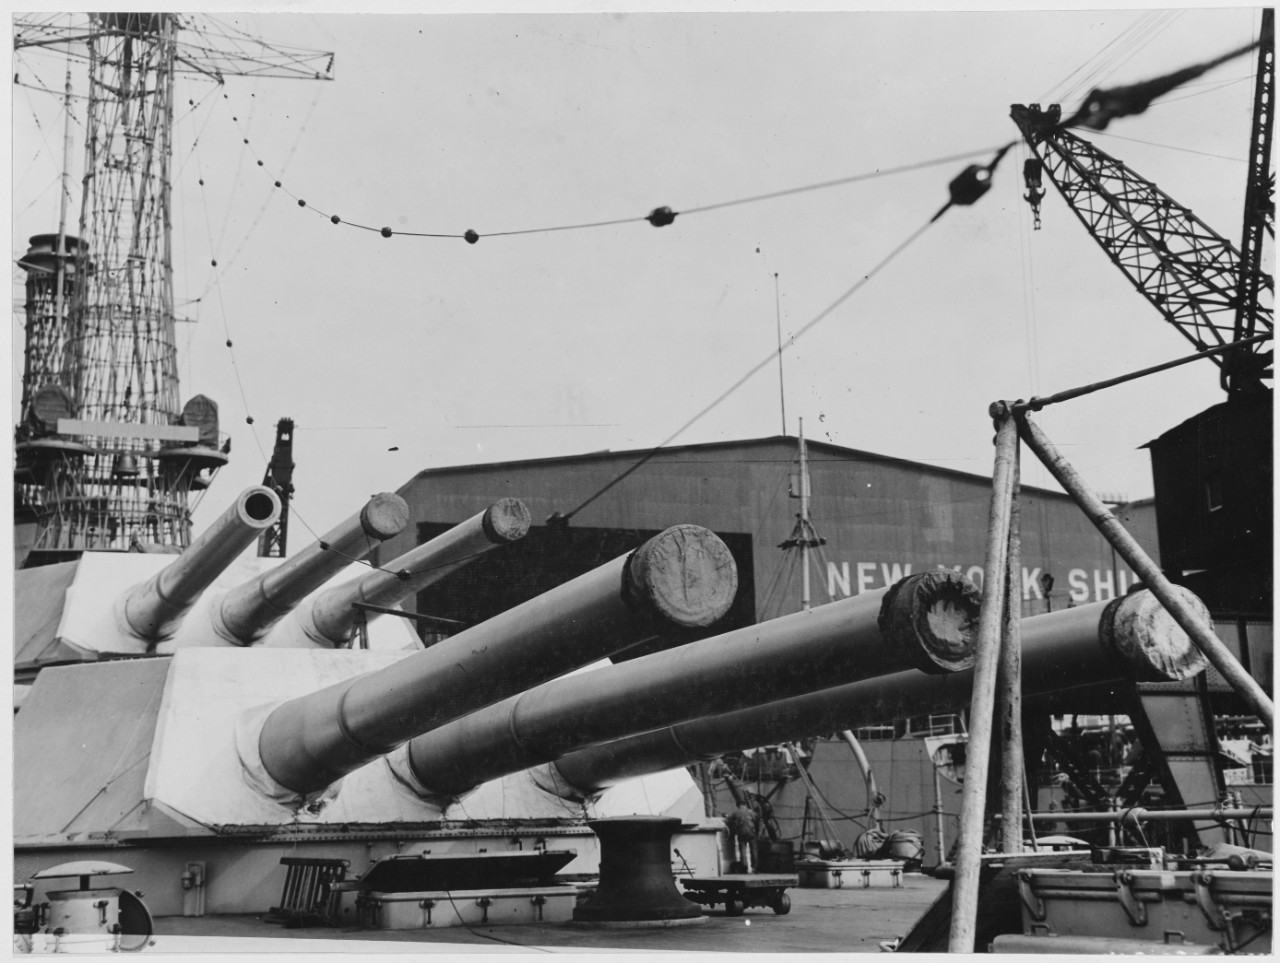 Six of the USS IDAHO, 14 inch 50 caliber guns, June 24, 1919